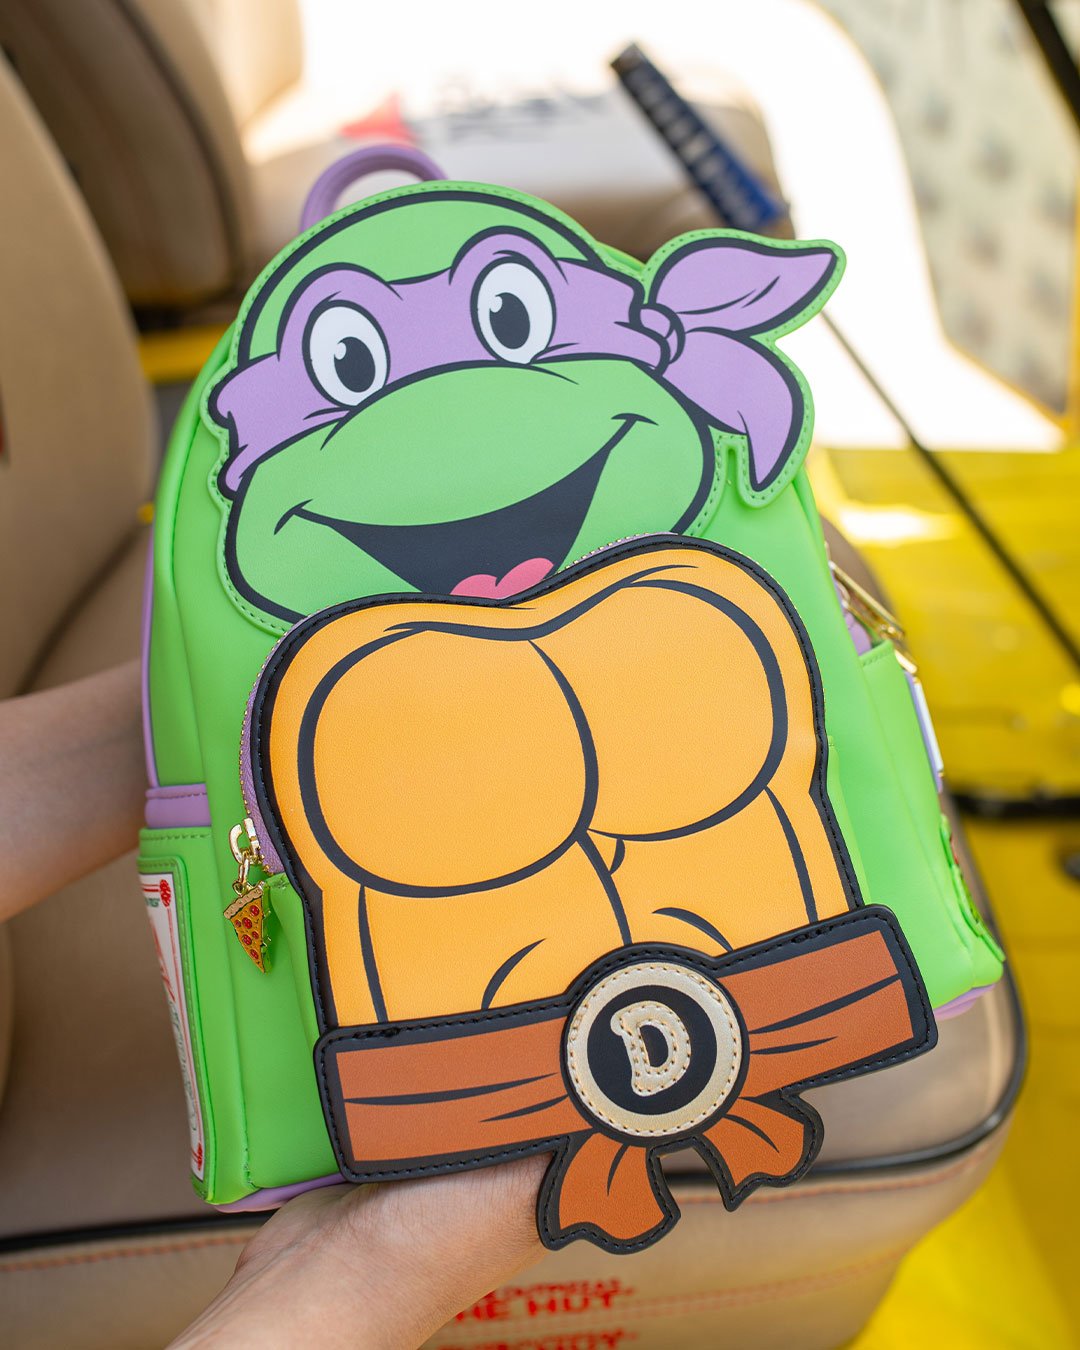 671803390911 - 707 Street Exclusive - Loungefly Nickelodeon TMNT Donatello Cosplay Mini Backpack - IRL 01